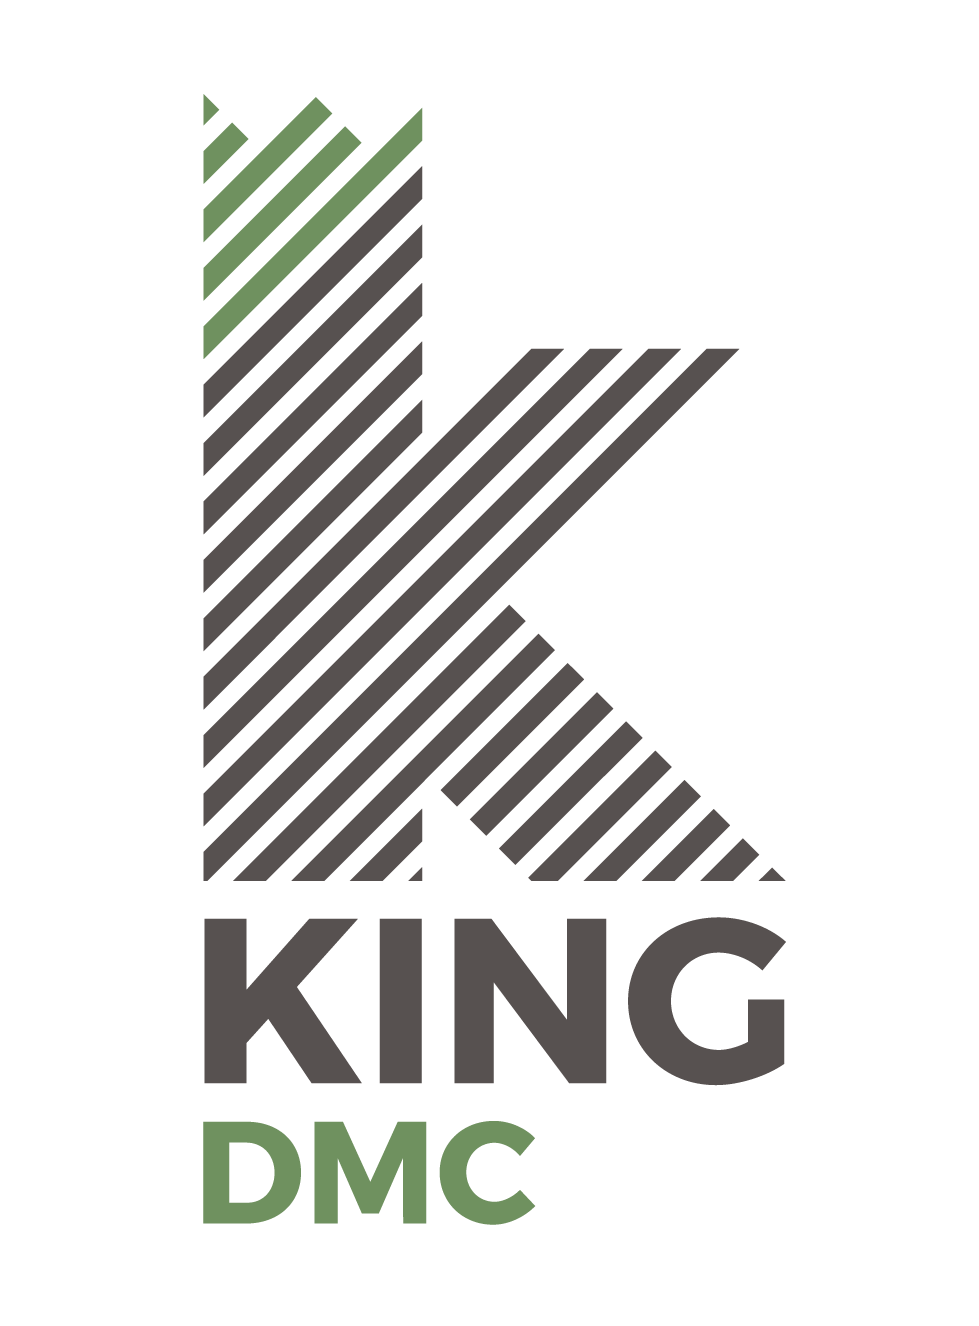 King DMC logo